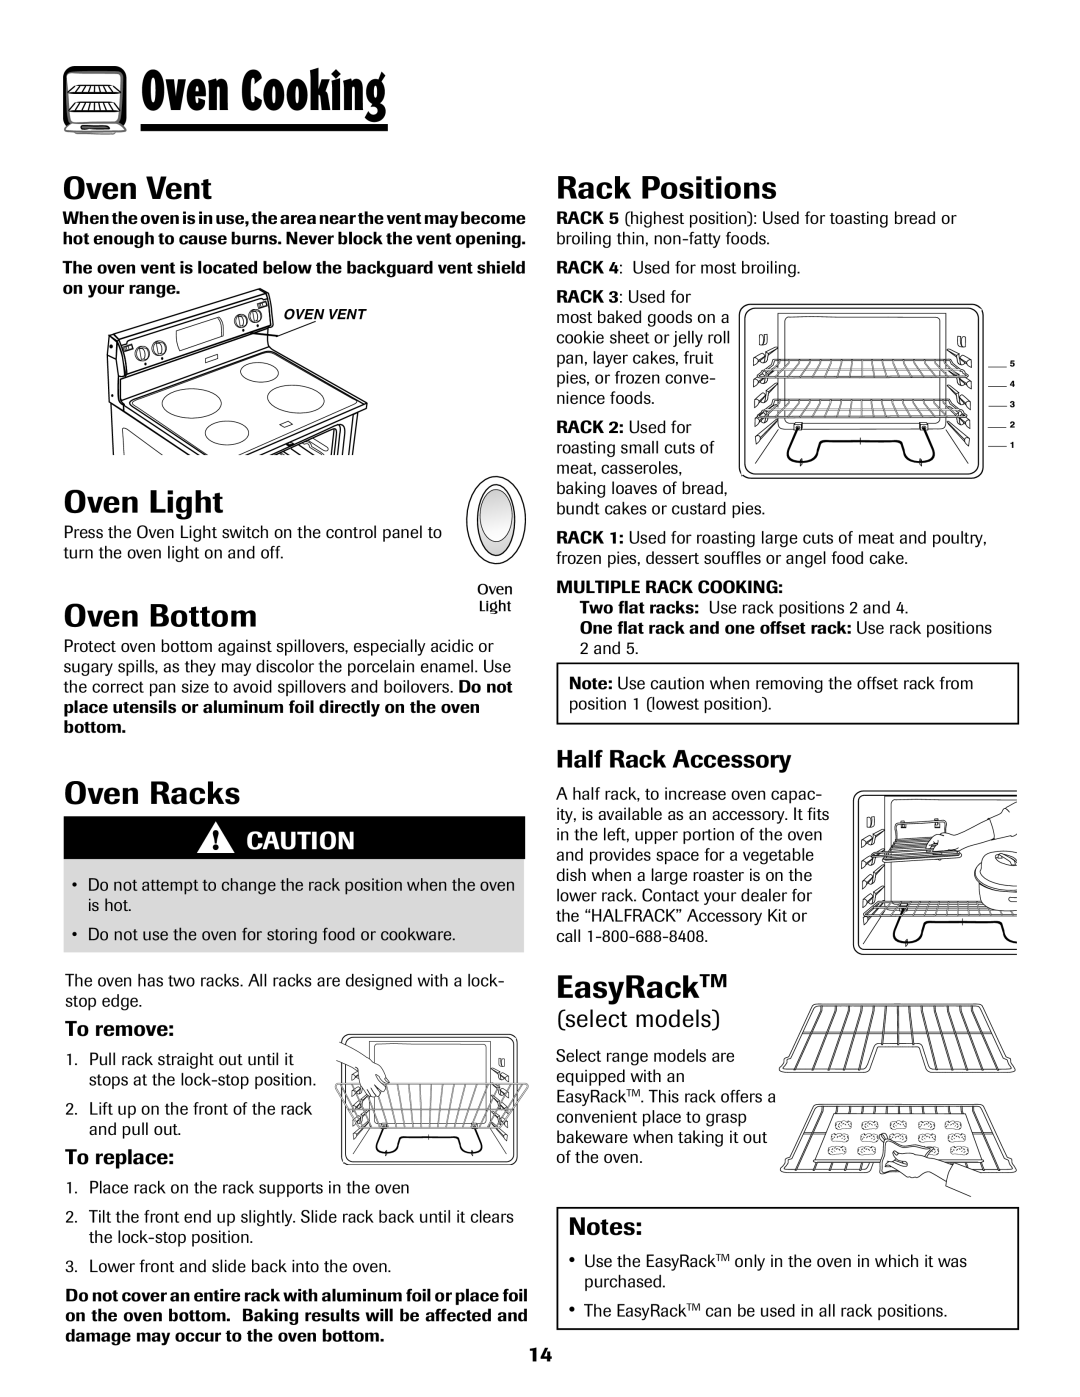 Maytag MER5552BAW warranty Oven Vent, Oven Light, Oven Bottom, Oven Racks, Rack Positions, EasyRackTM, Half Rack Accessory 